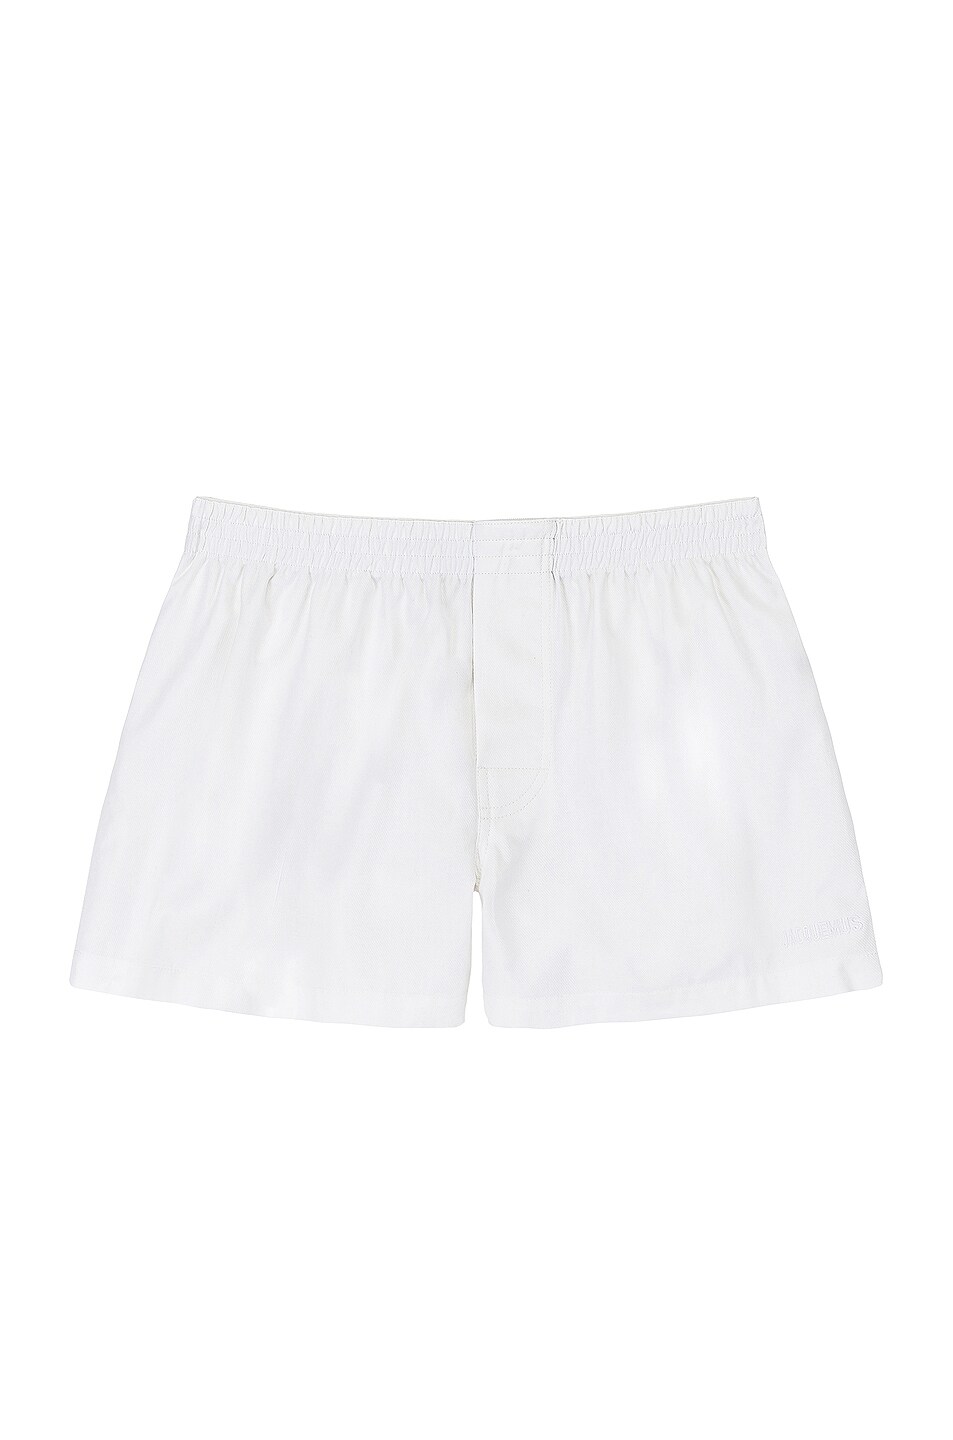 JACQUEMUS Shorts in White | FWRD